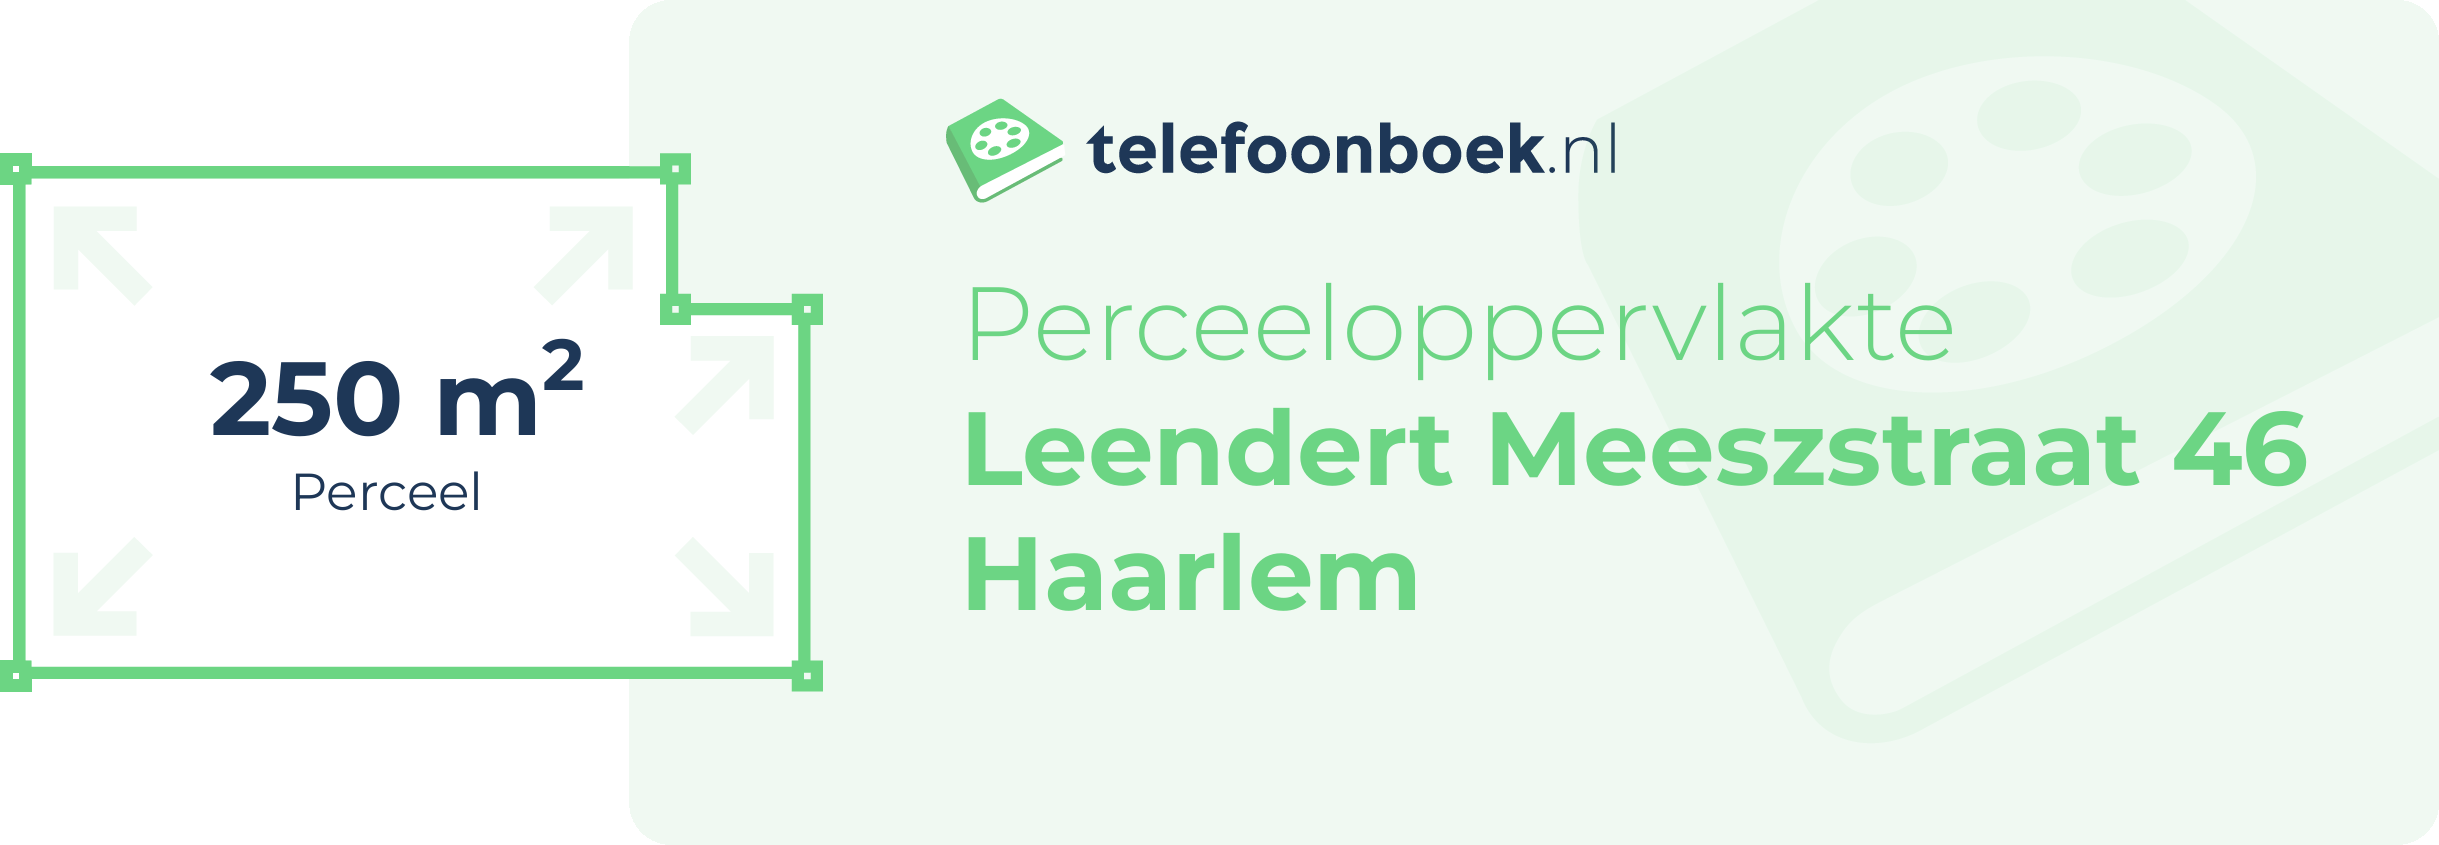 Perceeloppervlakte Leendert Meeszstraat 46 Haarlem